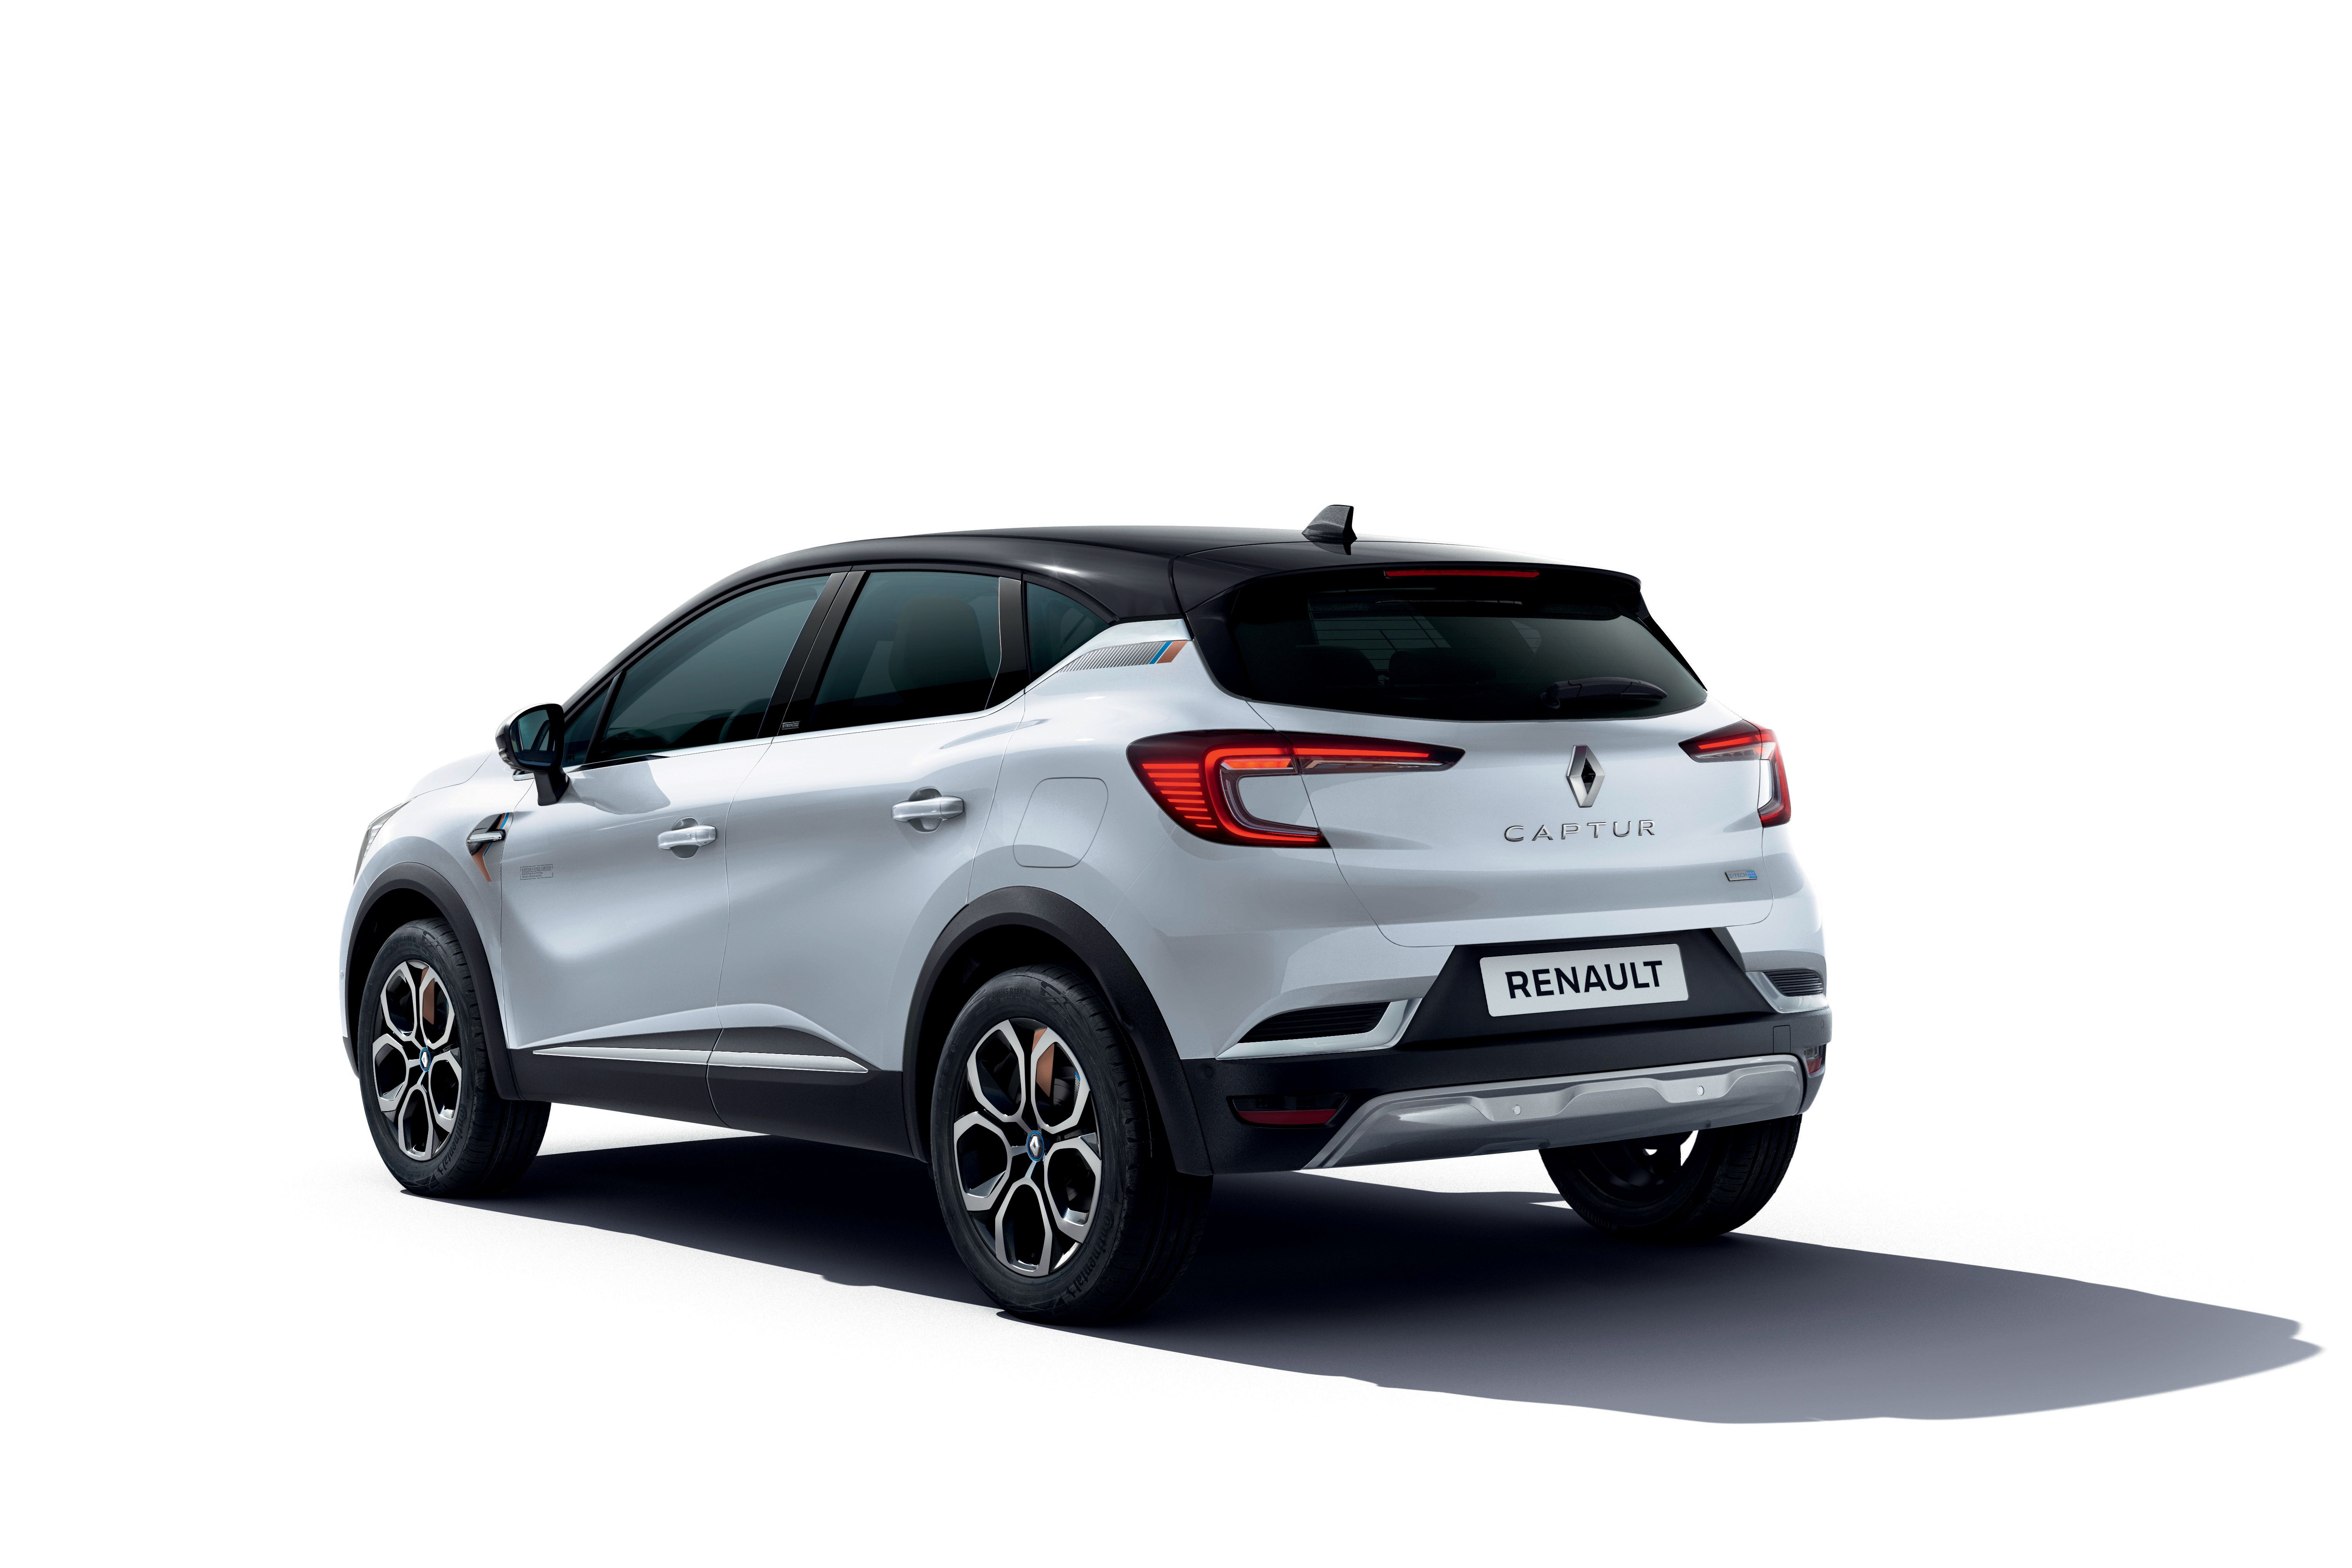 2020 Renault Captur on white background